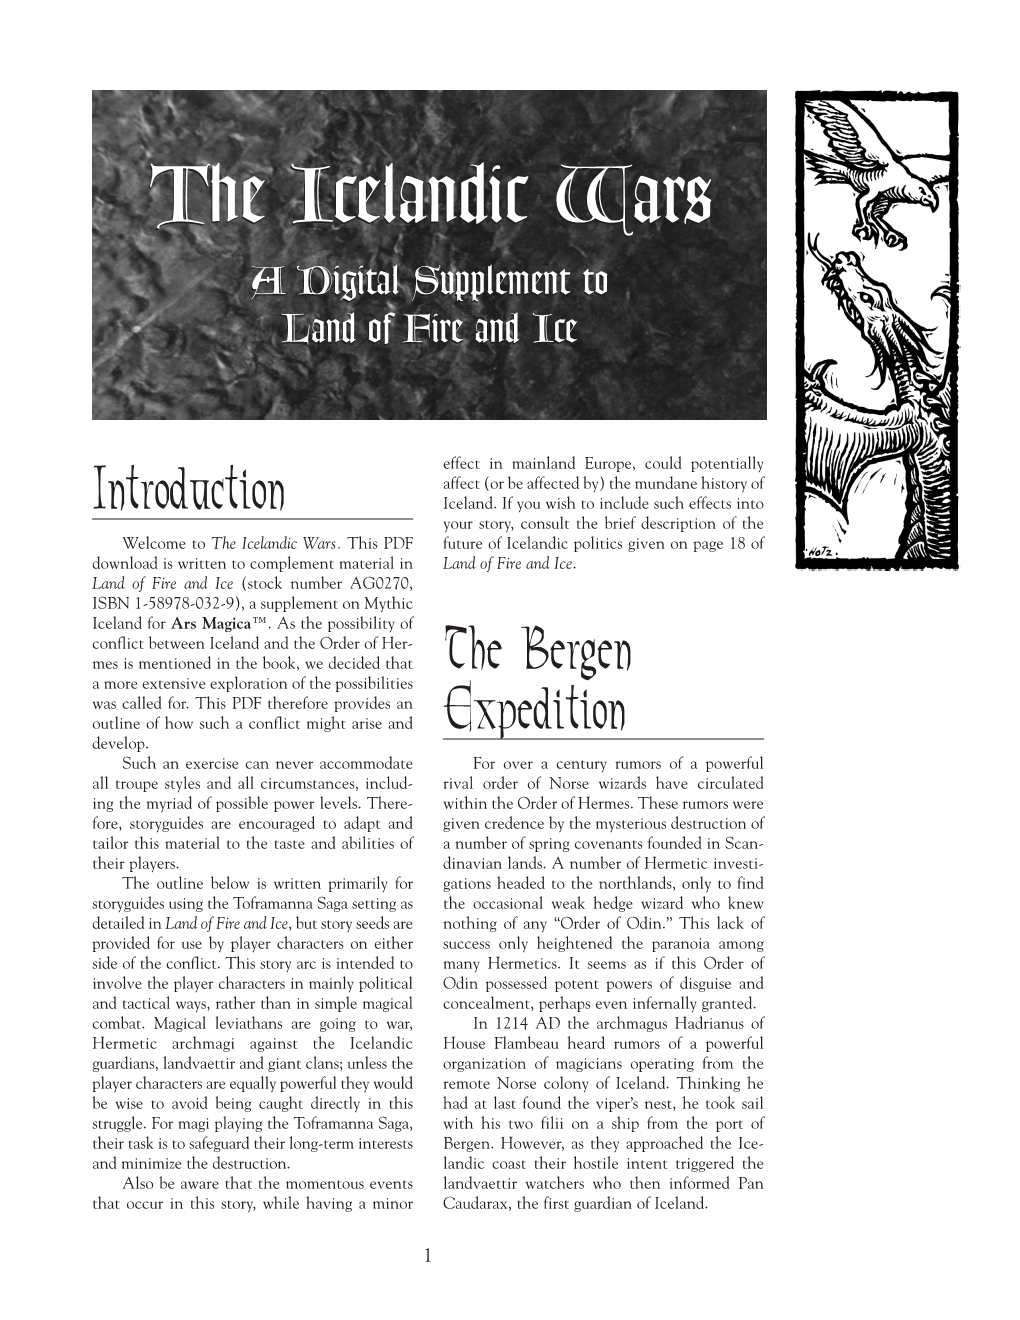 The Icelandic Wars the Icelandic Wars